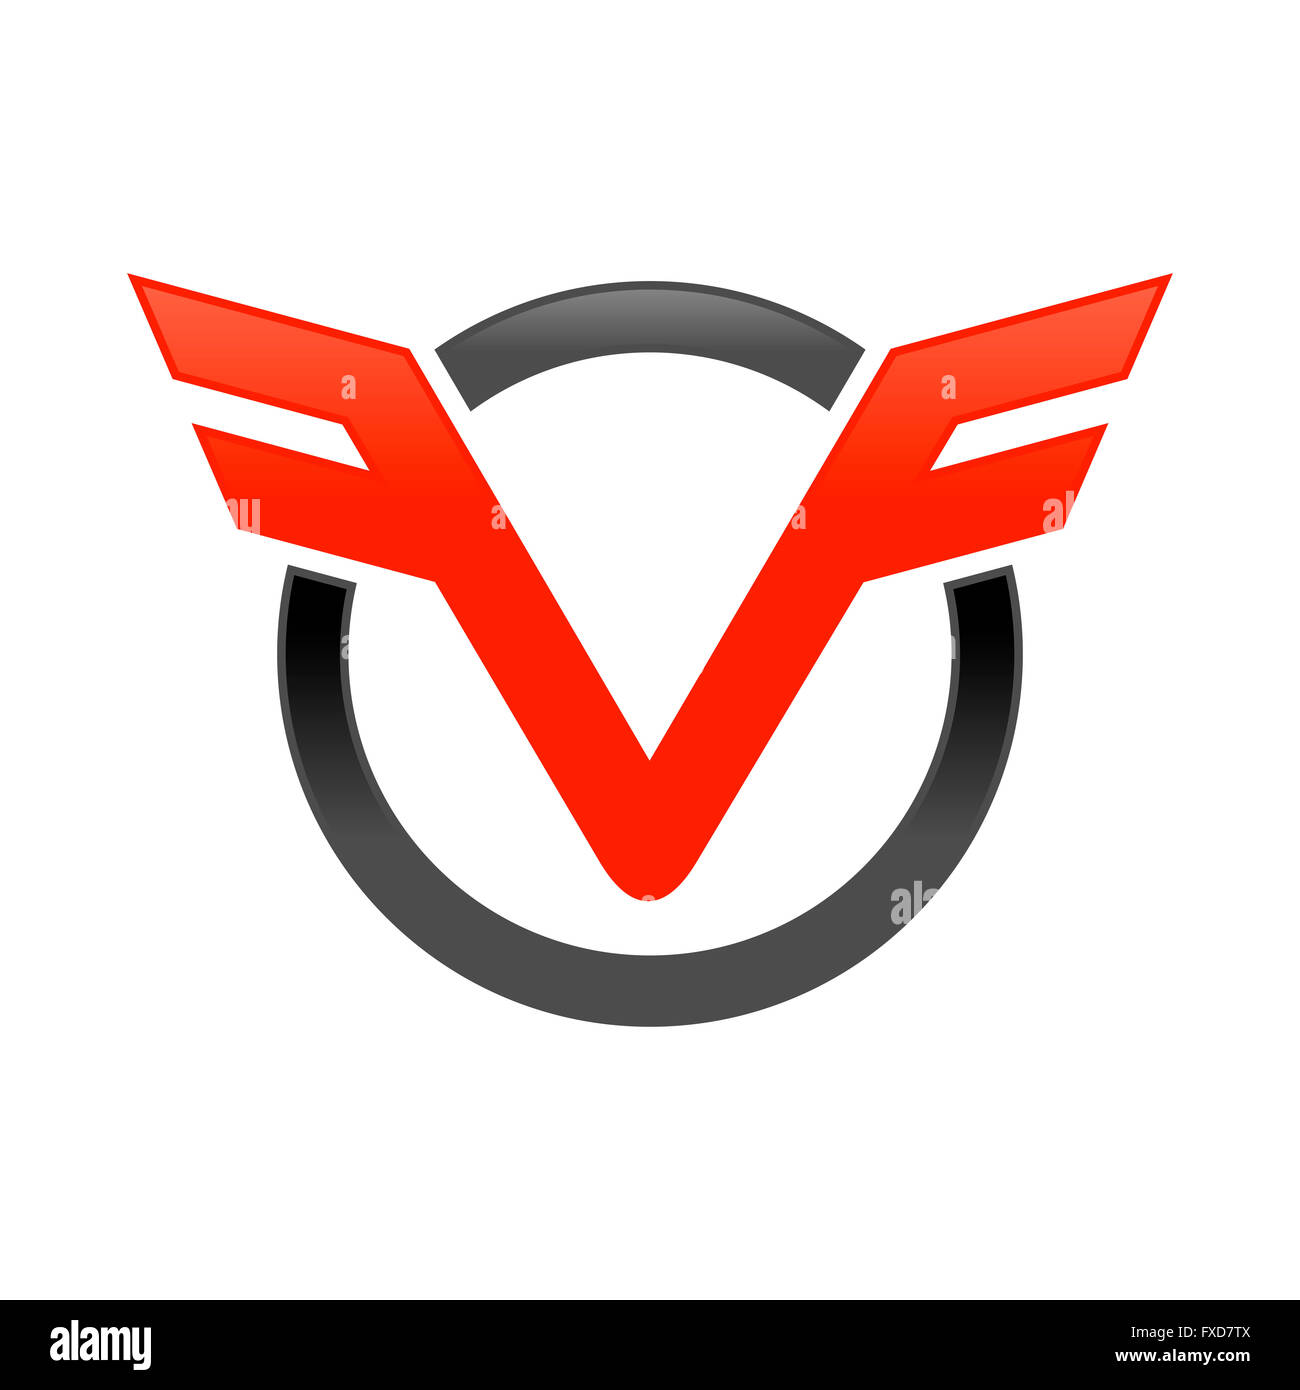 VF Initials Aviation Wings Stock Photo